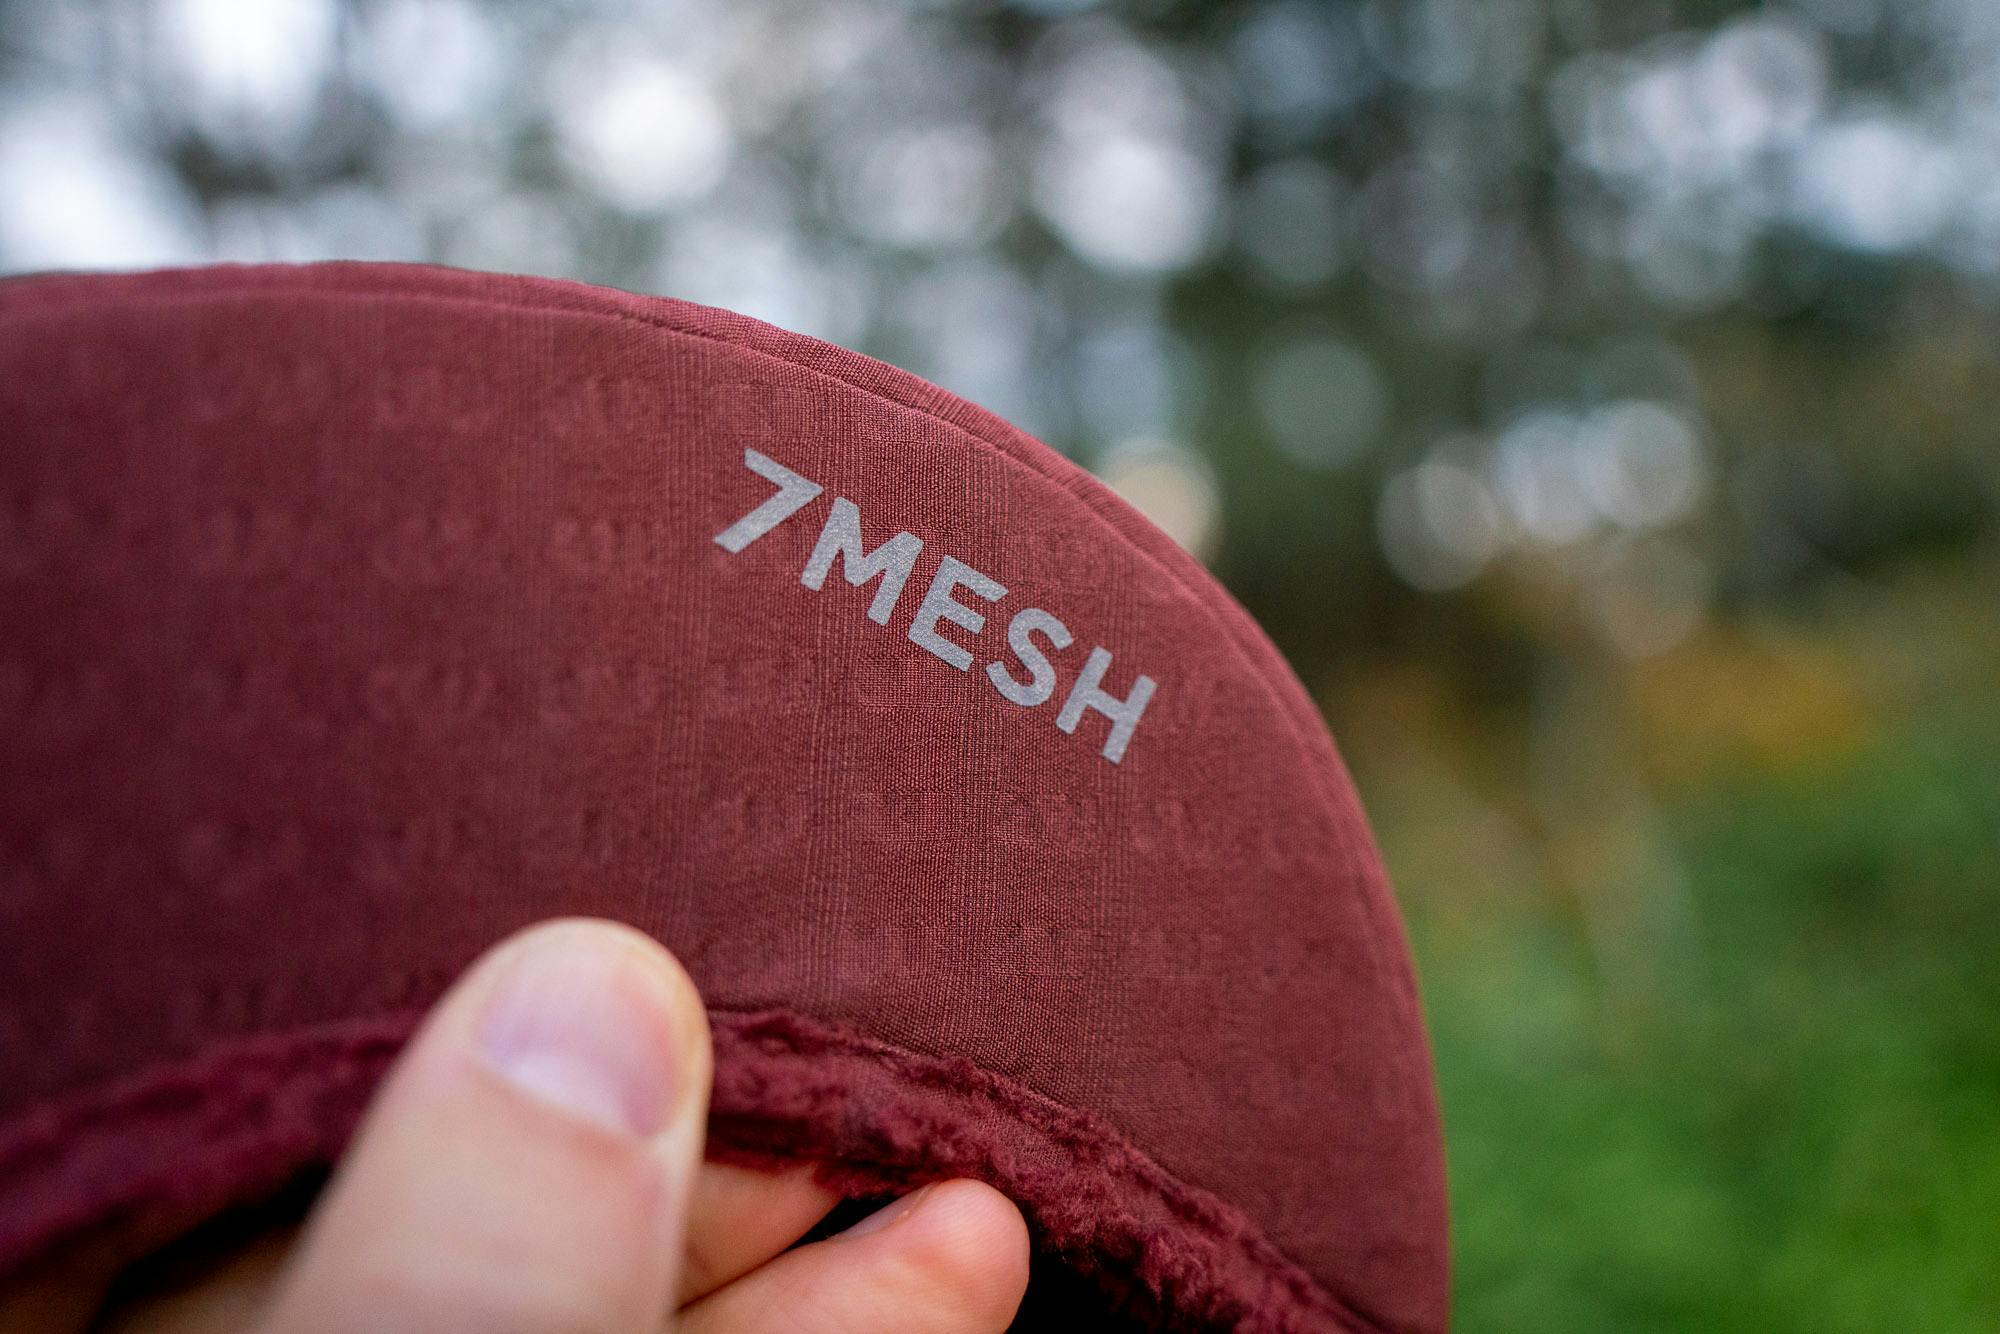 A closeup of the 7Mesh logo on the visor.